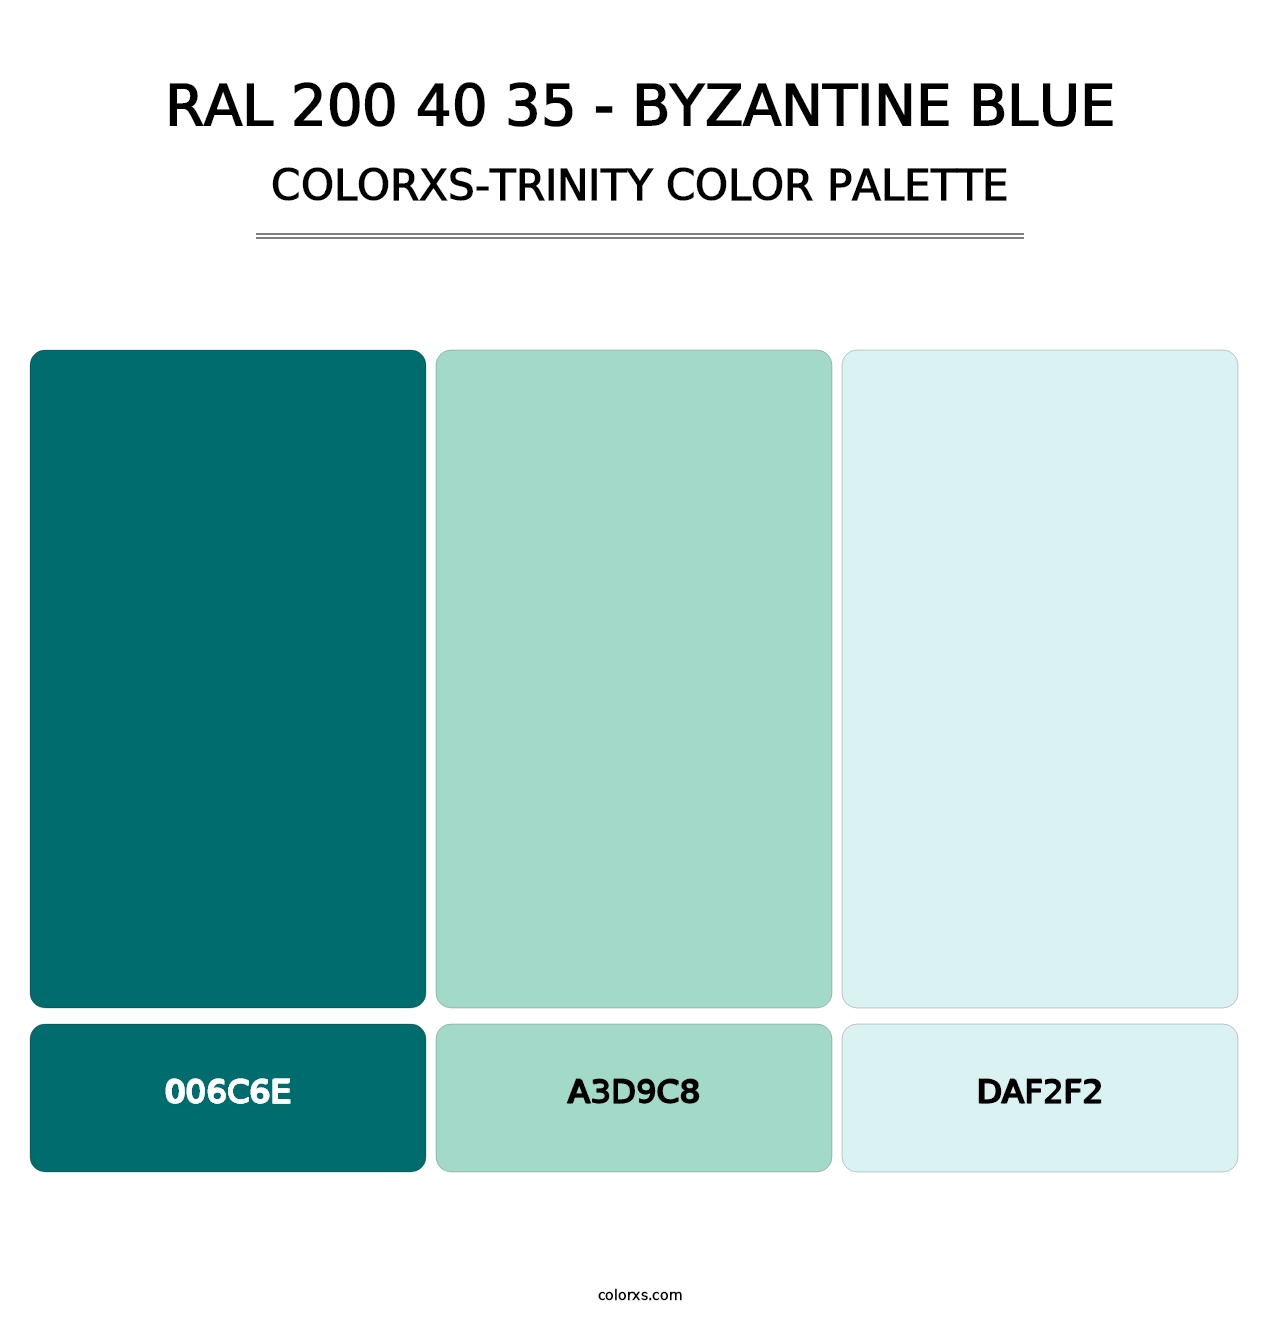 RAL 200 40 35 - Byzantine Blue - Colorxs Trinity Palette